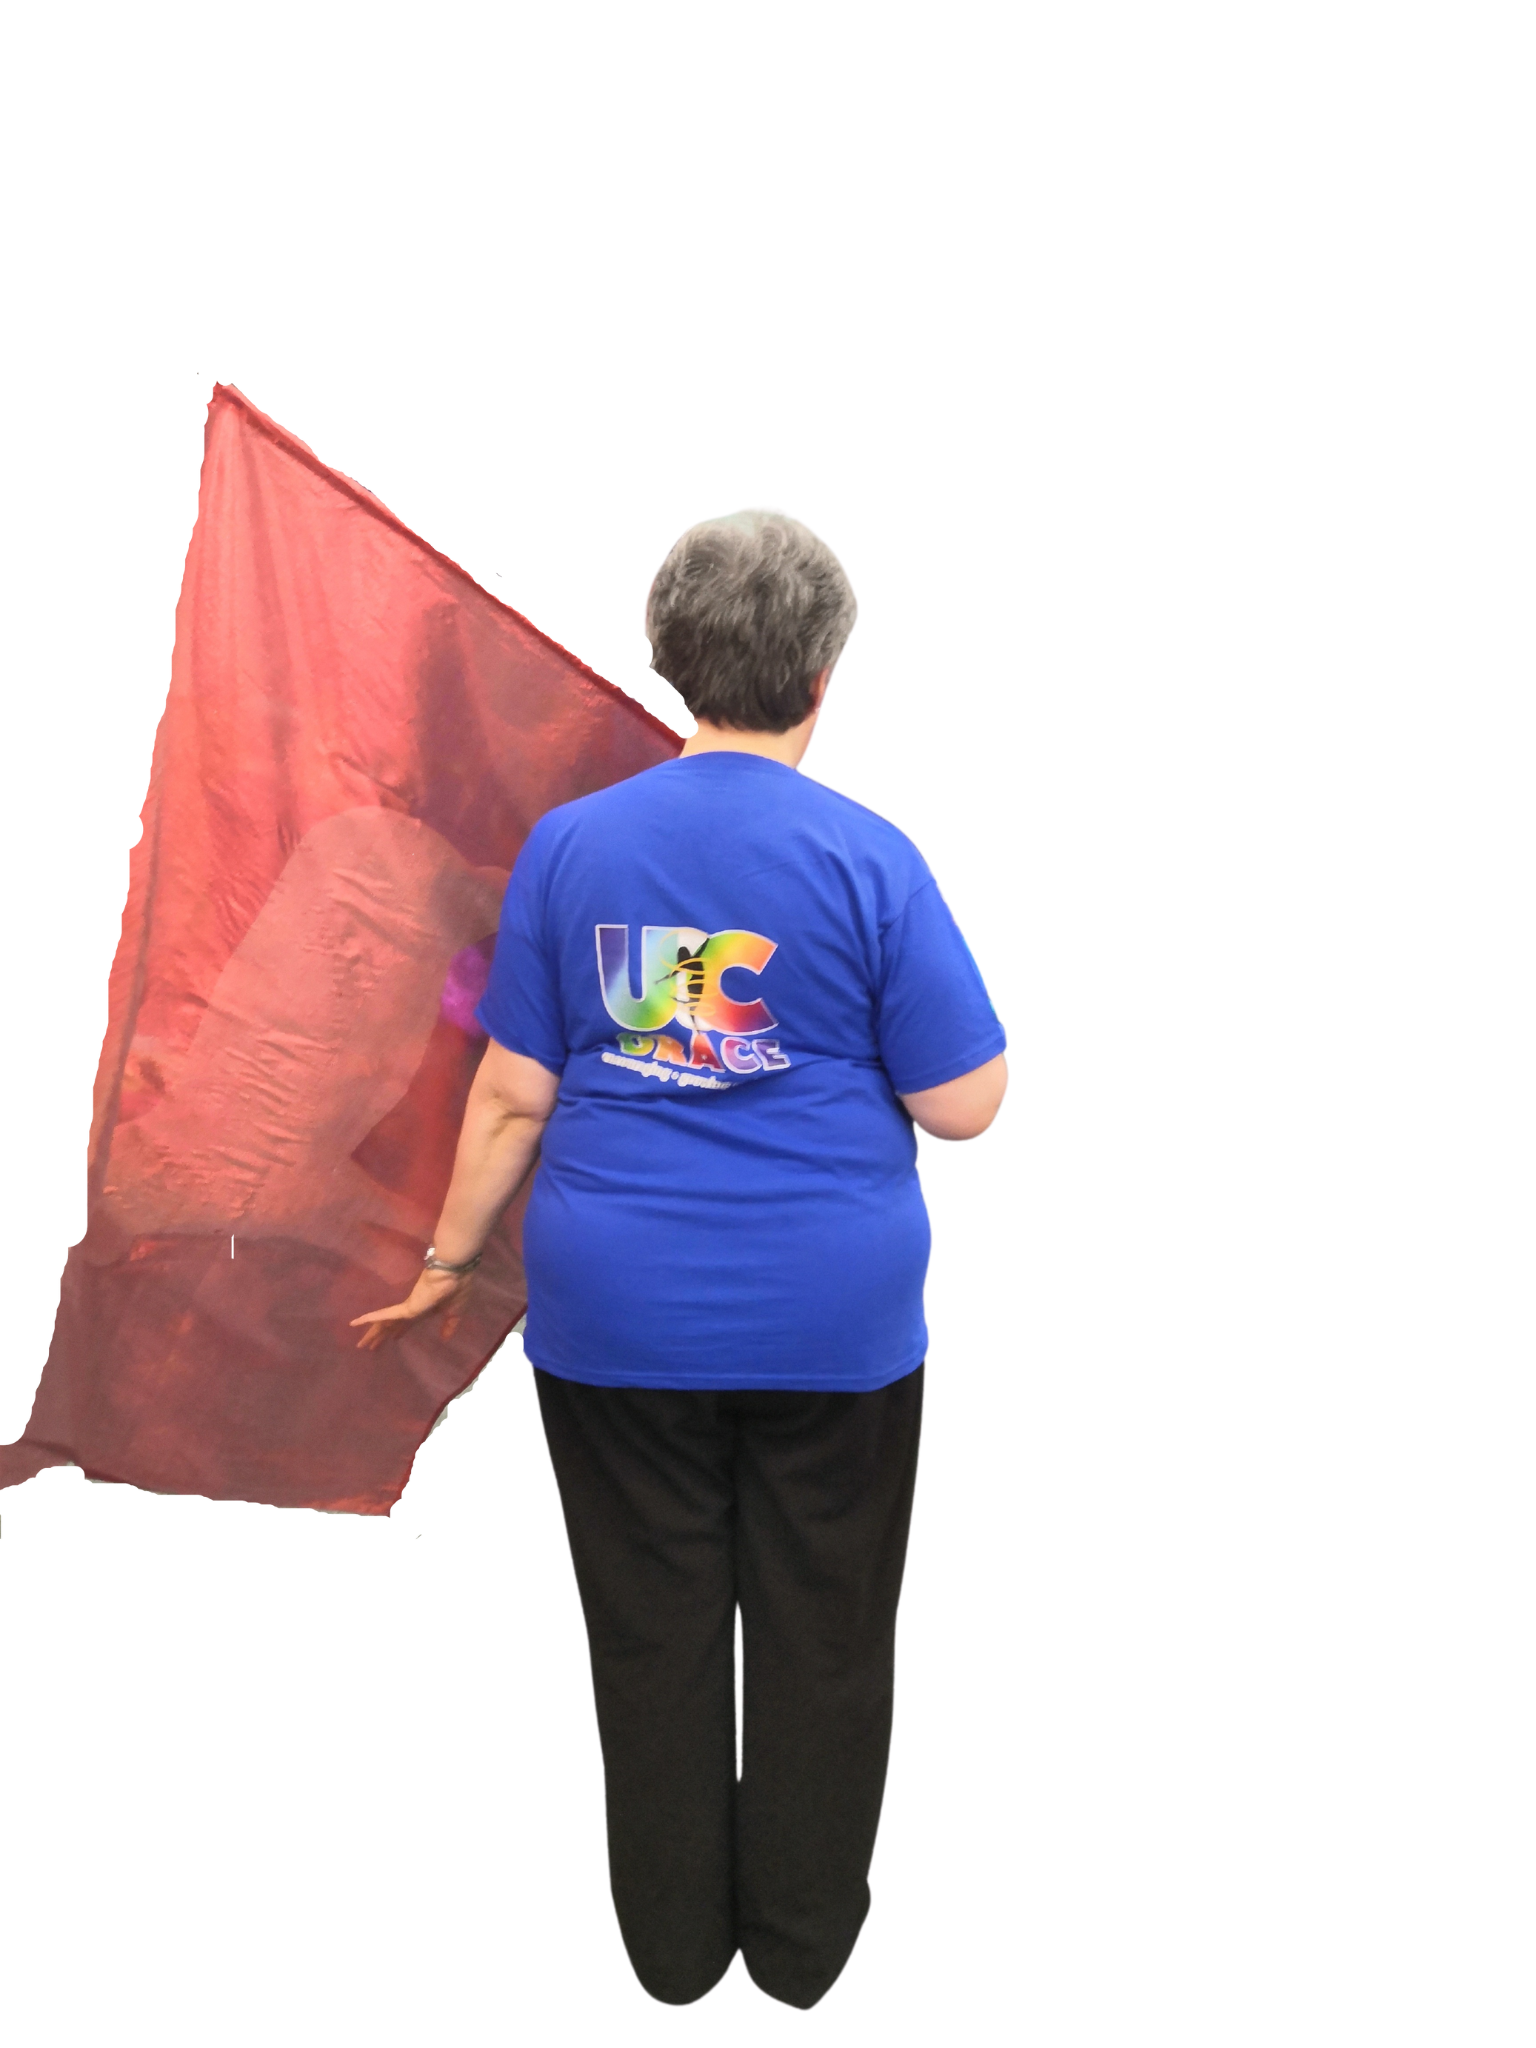 Christian dancer in blue UC Grace tshirt holding red flag